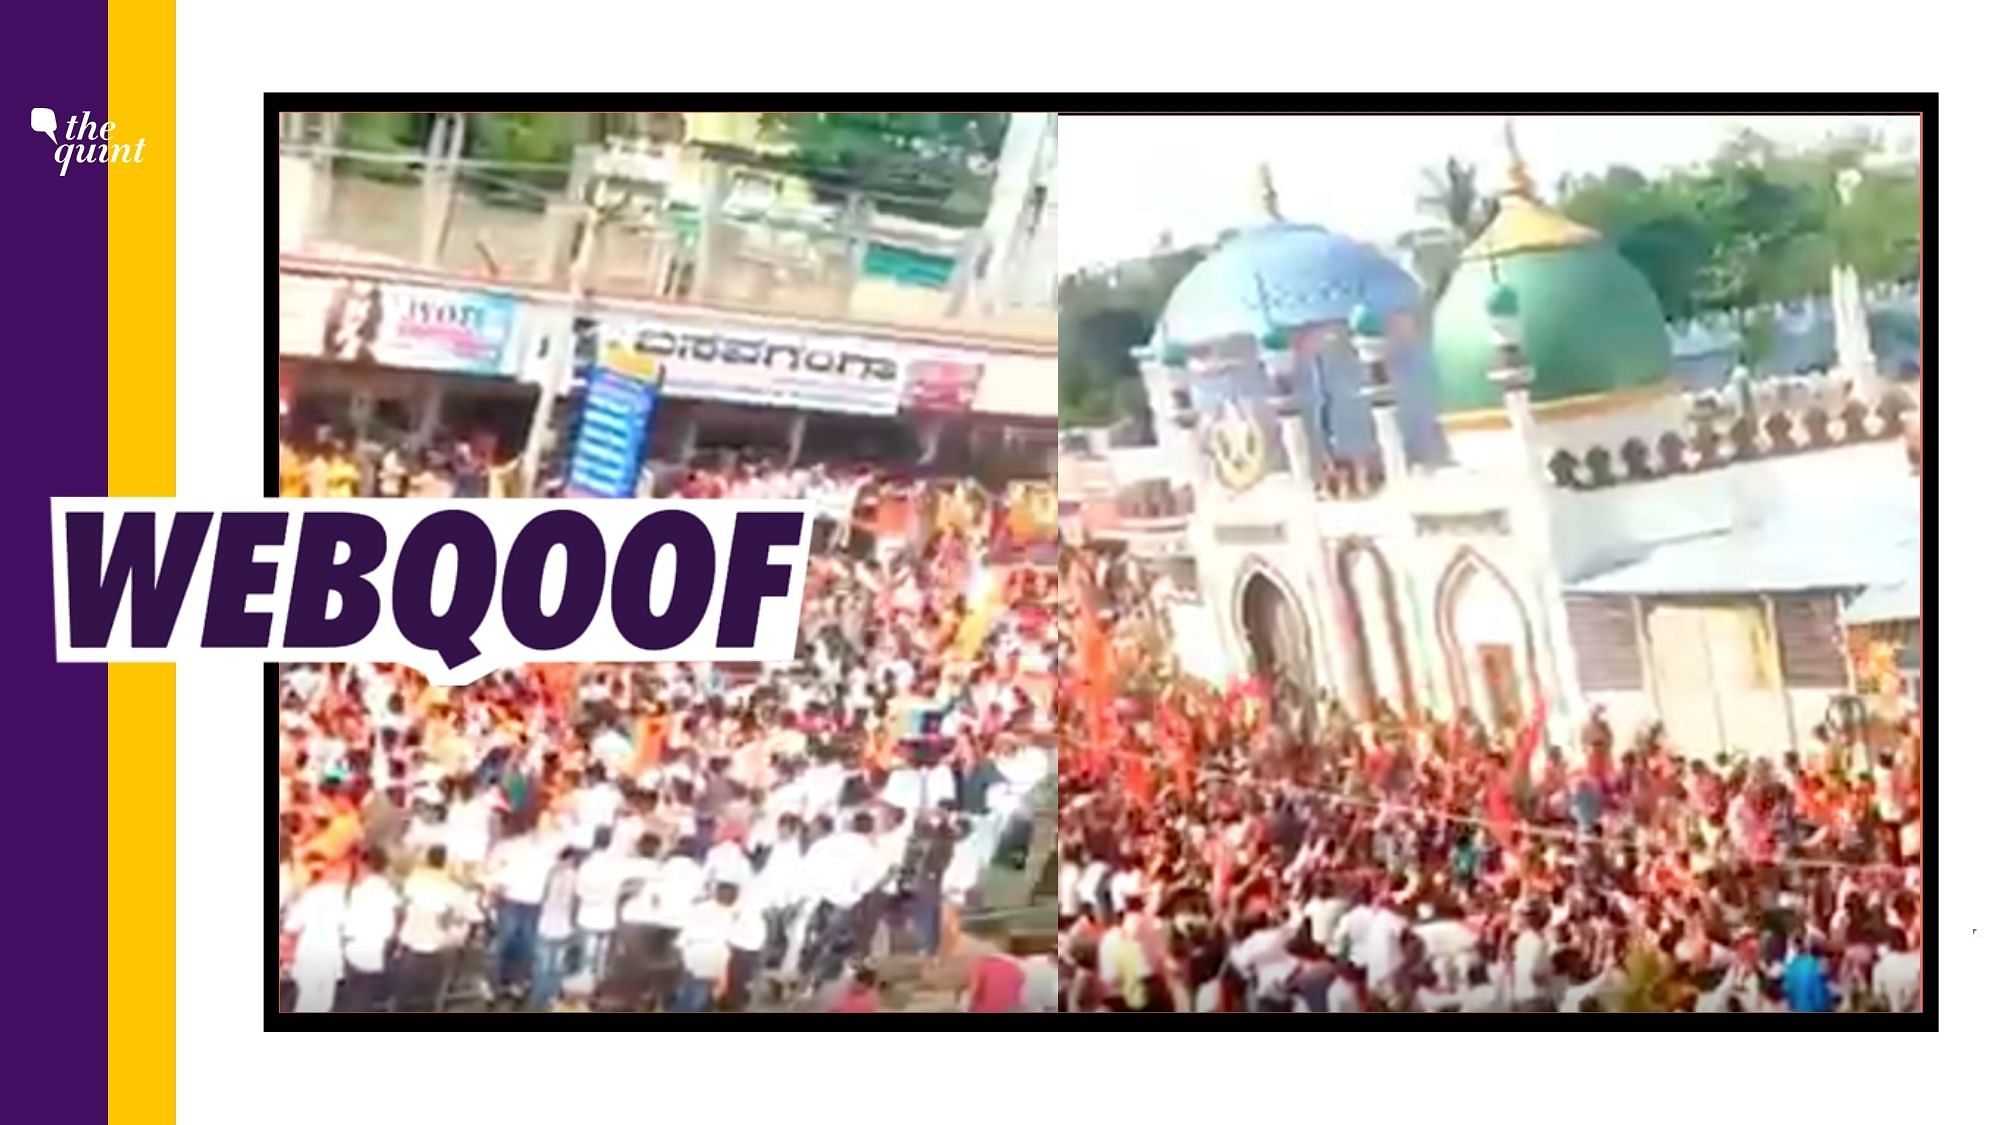 It is an old video from Karnataka’s Gulbarga and shows Ram Navami celebrations.